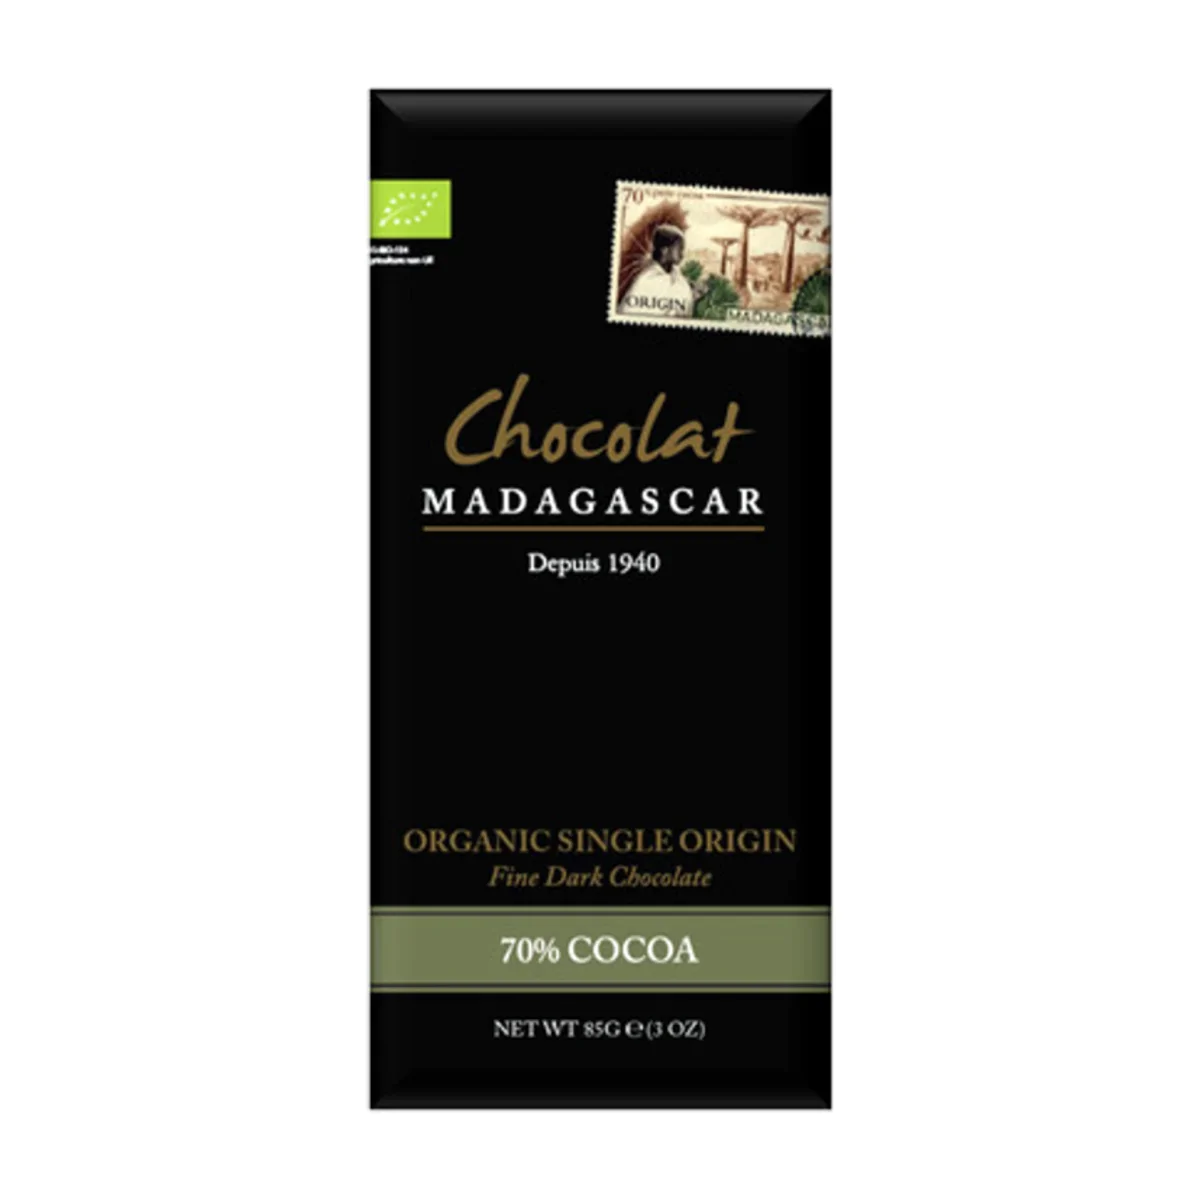 chocolat madagascar 70 prozent madagascar dunkle schokolade